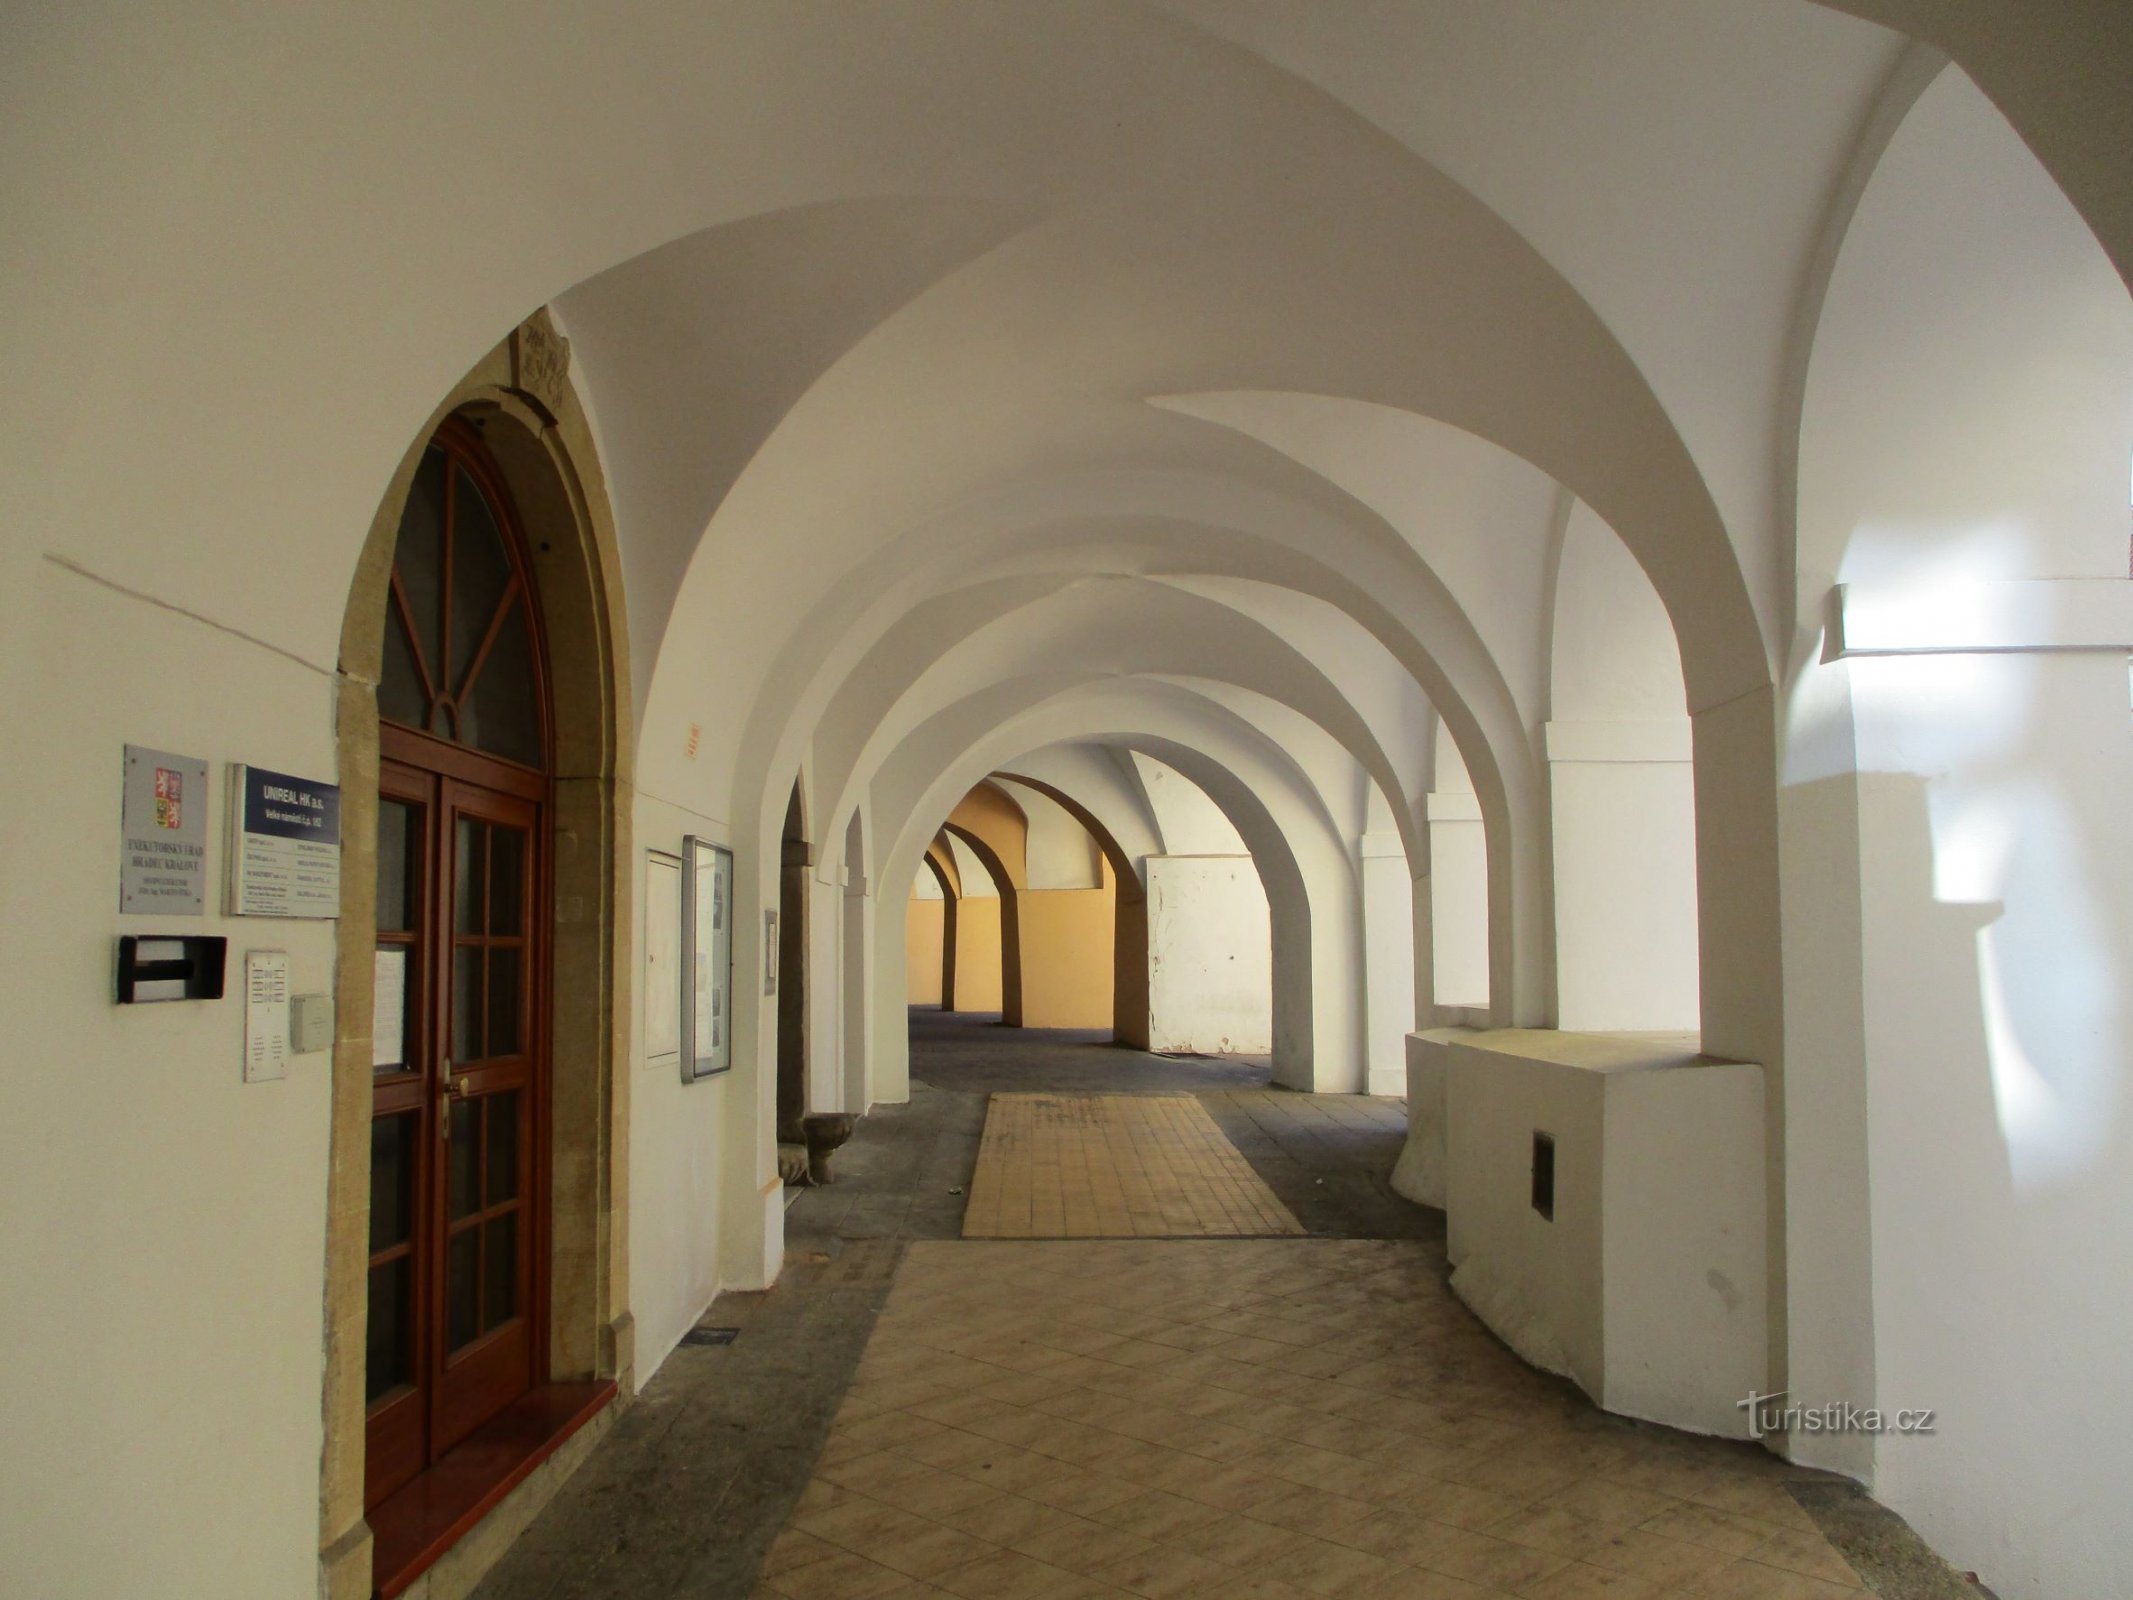 Großer Saal aus Nr. 162 (Hradec Králové, 25.4.2020)